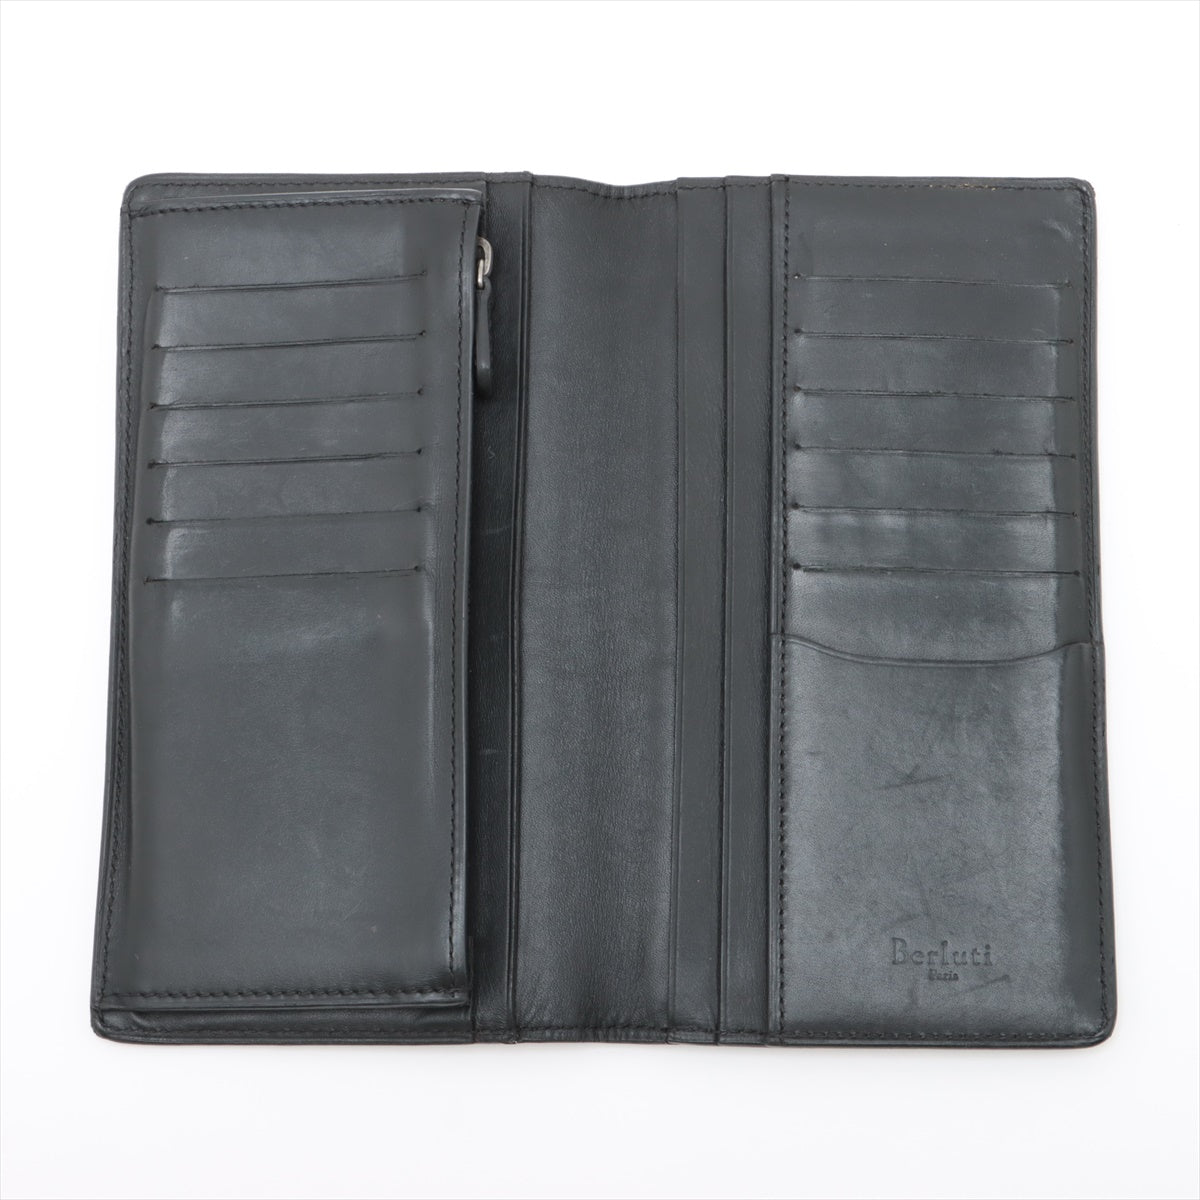 Berluti Santal Leather Wallet Black